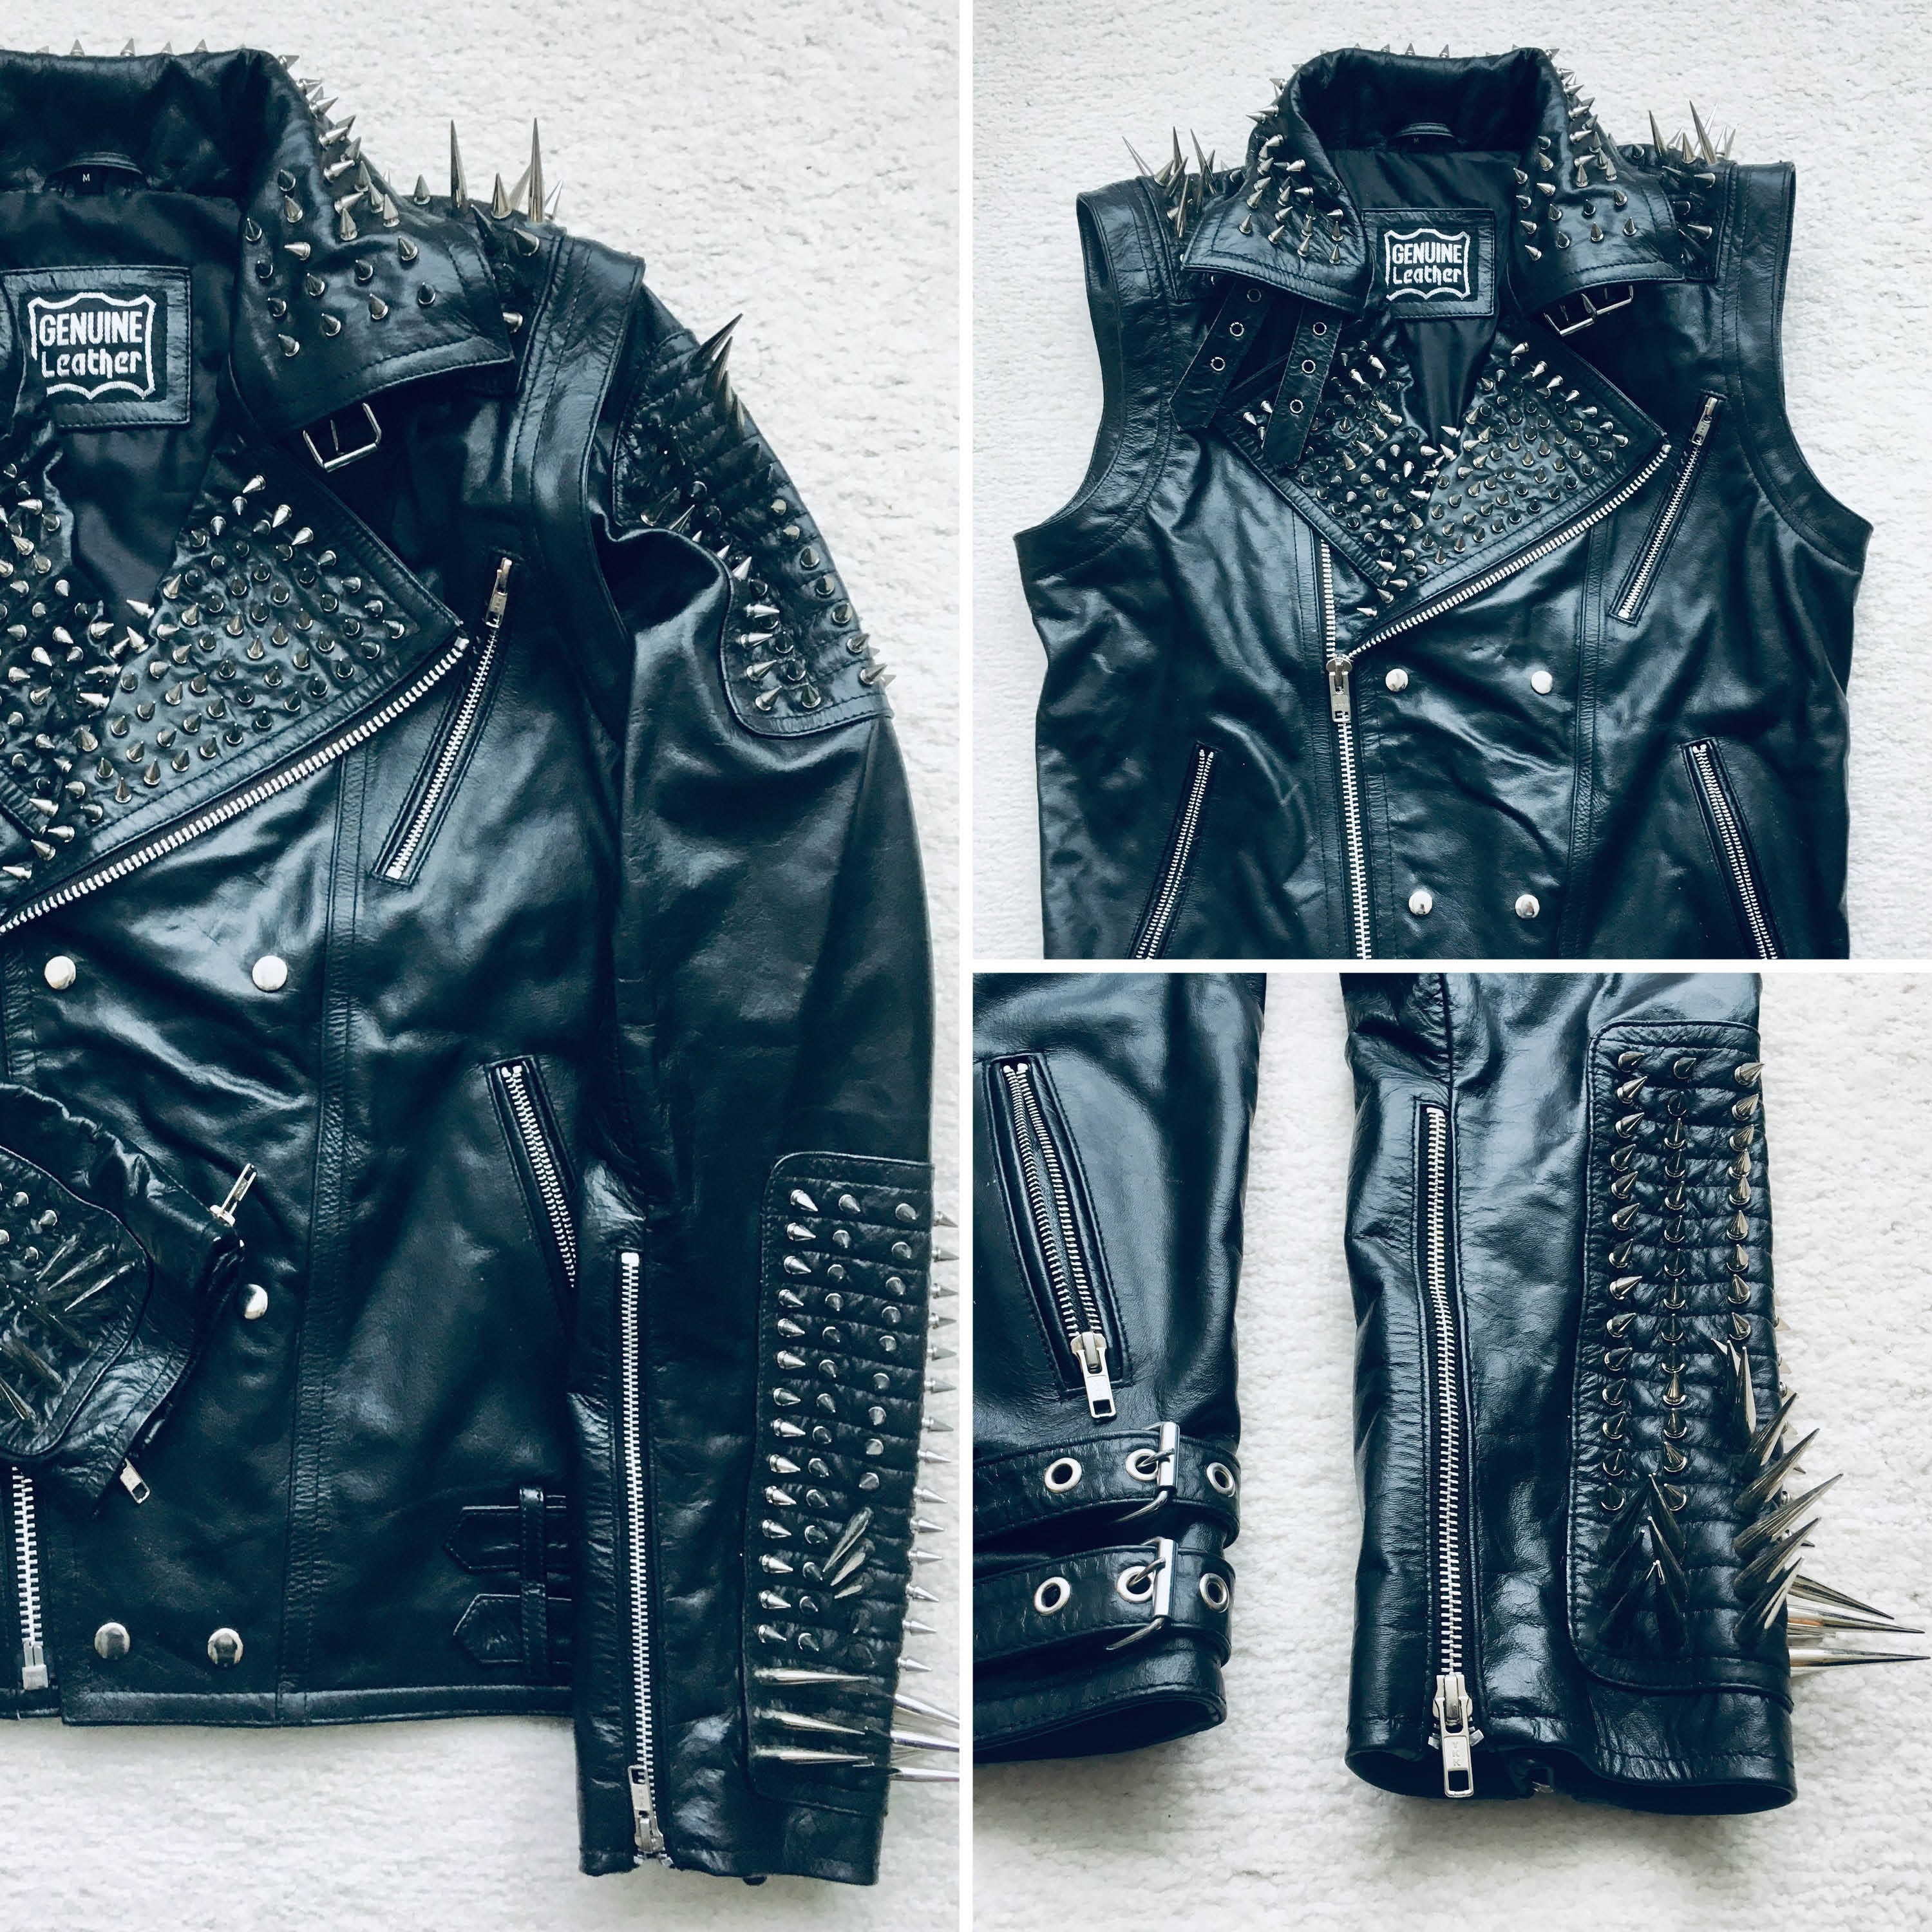 studwork Personalized Men's Patches Studded Jacket, Made to Order Premium Leather Gothic Jacket, Motorbike Punk Silver Studs Fashion Jacket